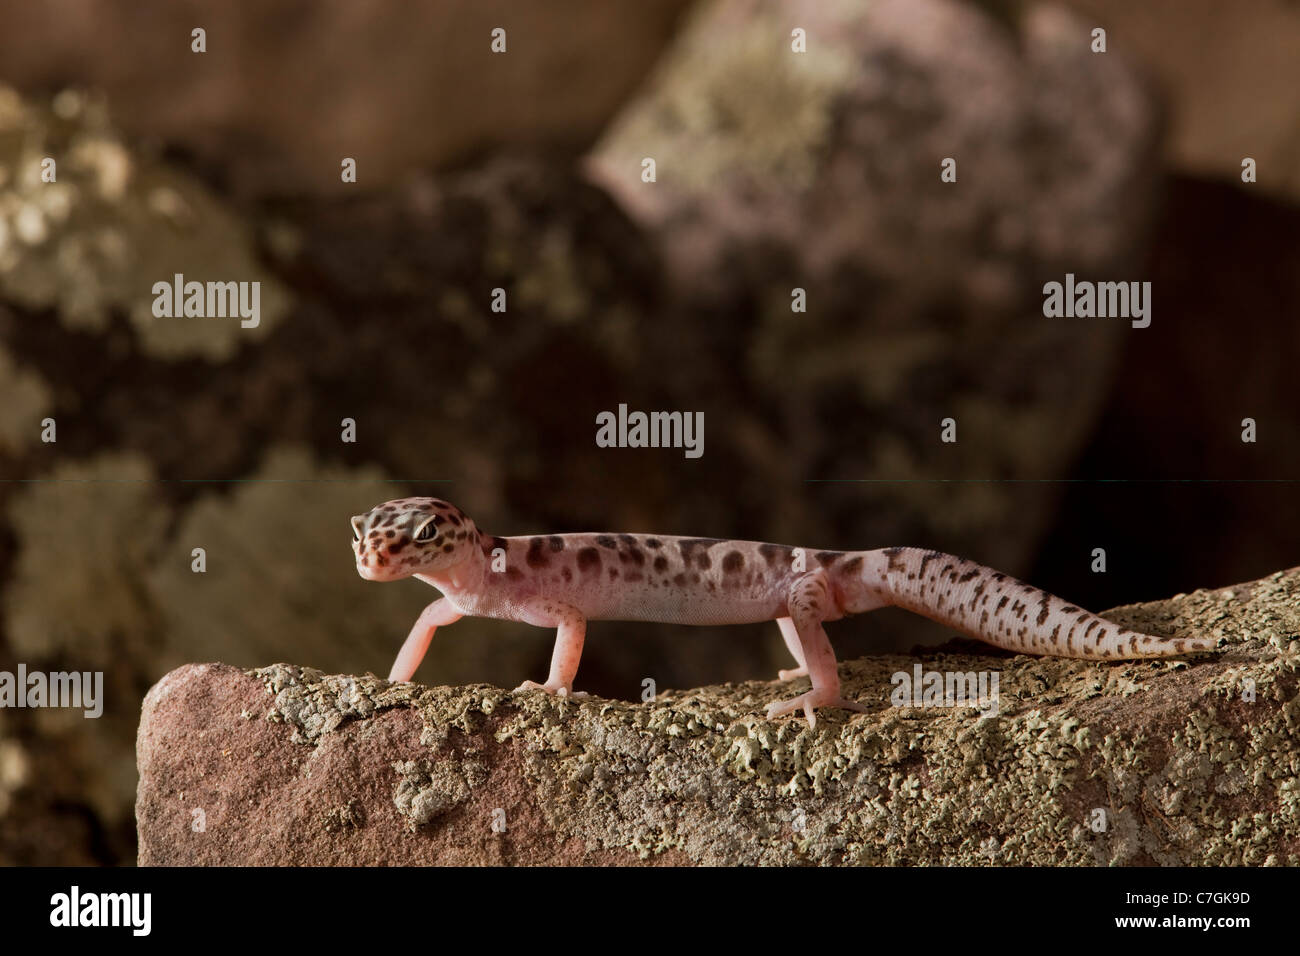 Western gebändert Gecko Coleonyx variegatus Stockfoto